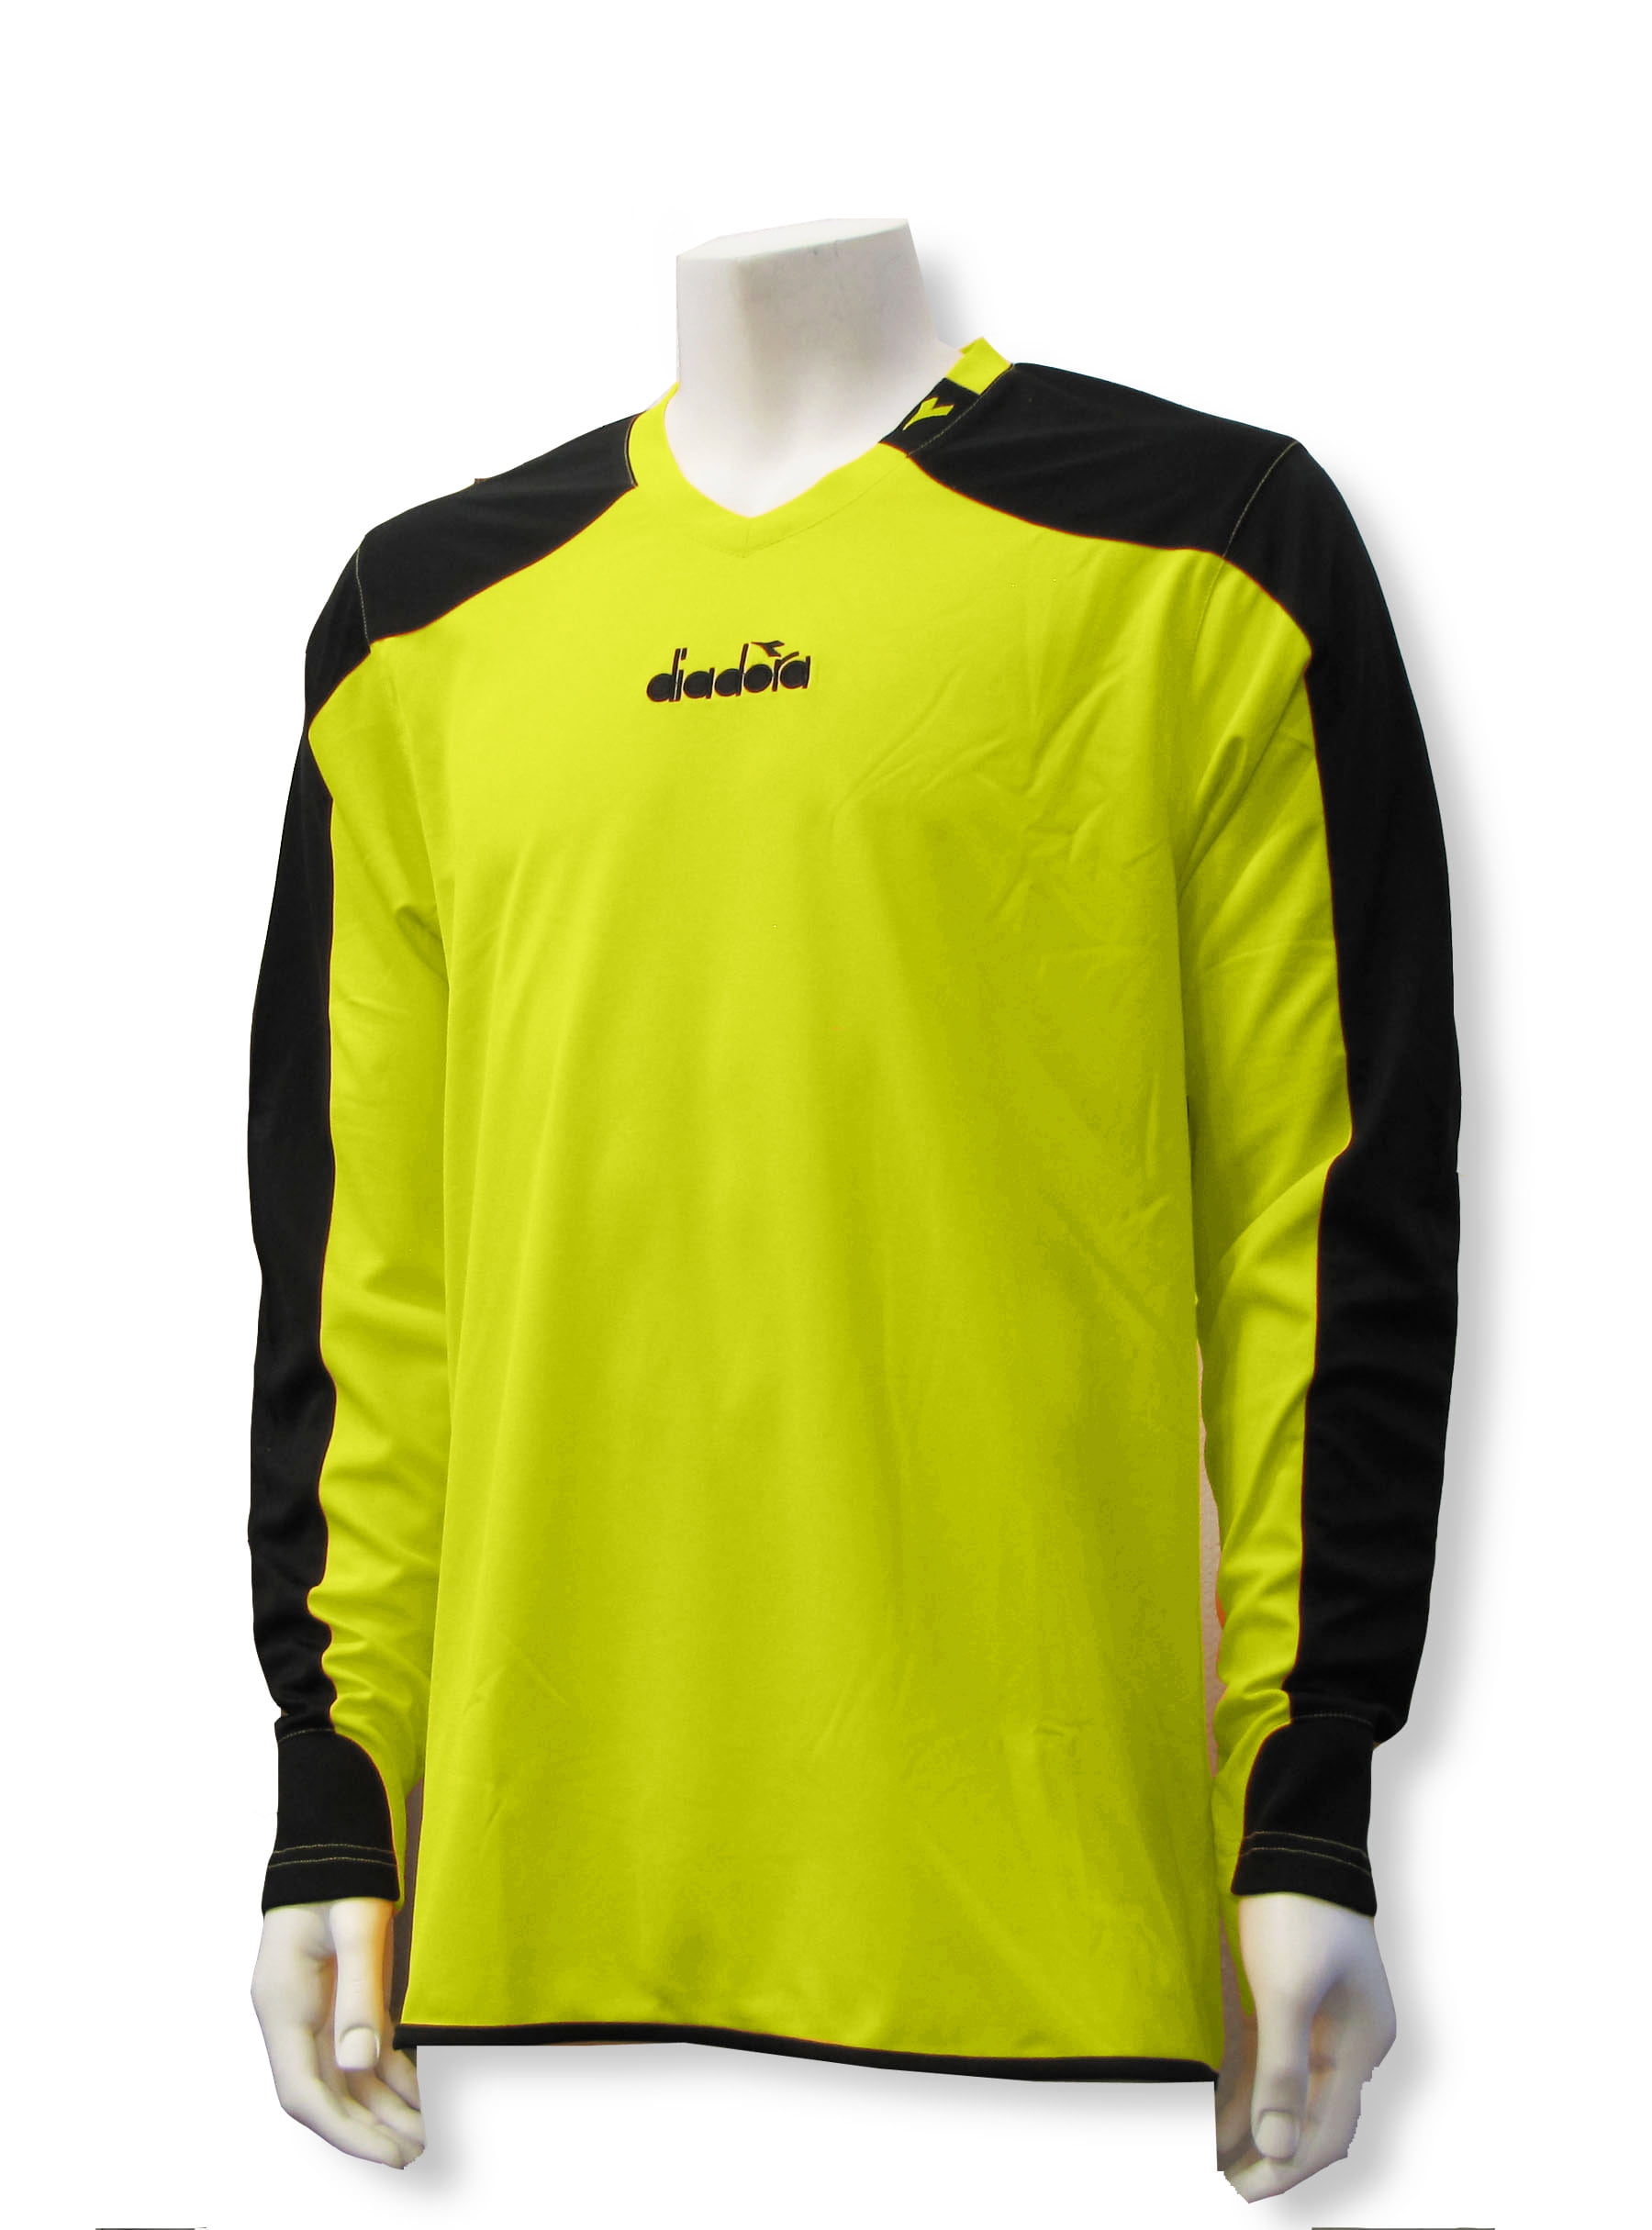 diadora goalkeeper jersey